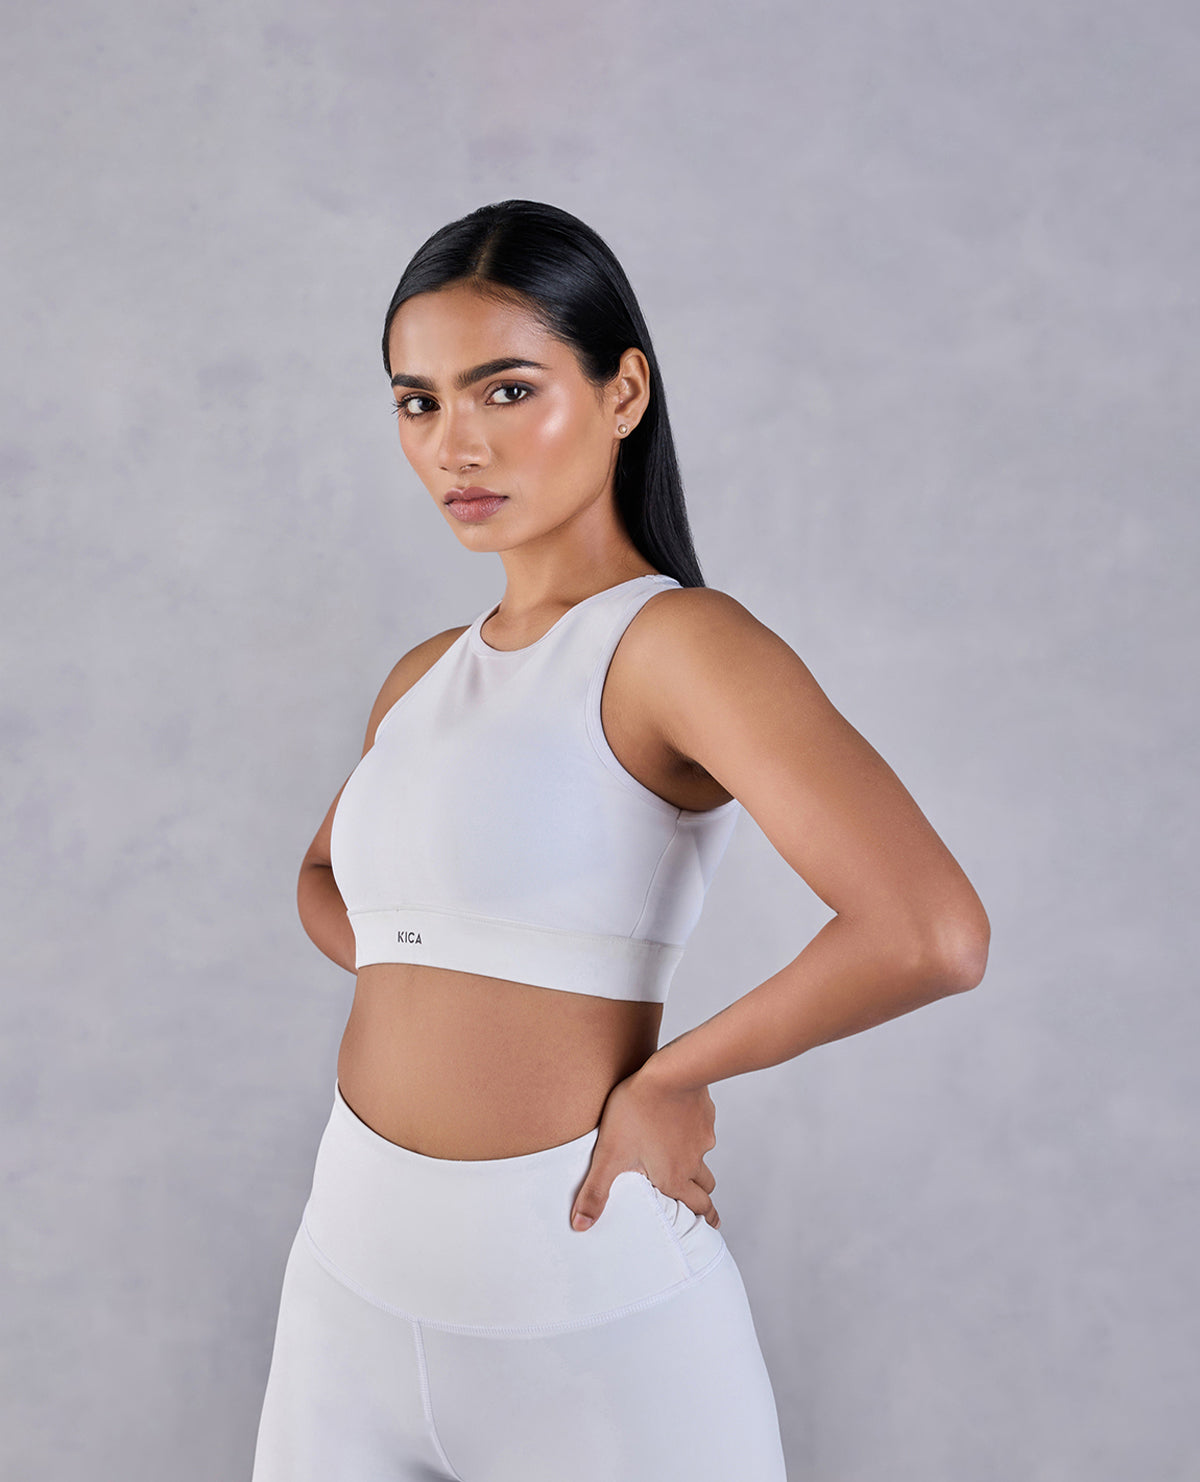 Buy LooksOMG's Cotton Lycra Sports bra in White Pack of 6. Online